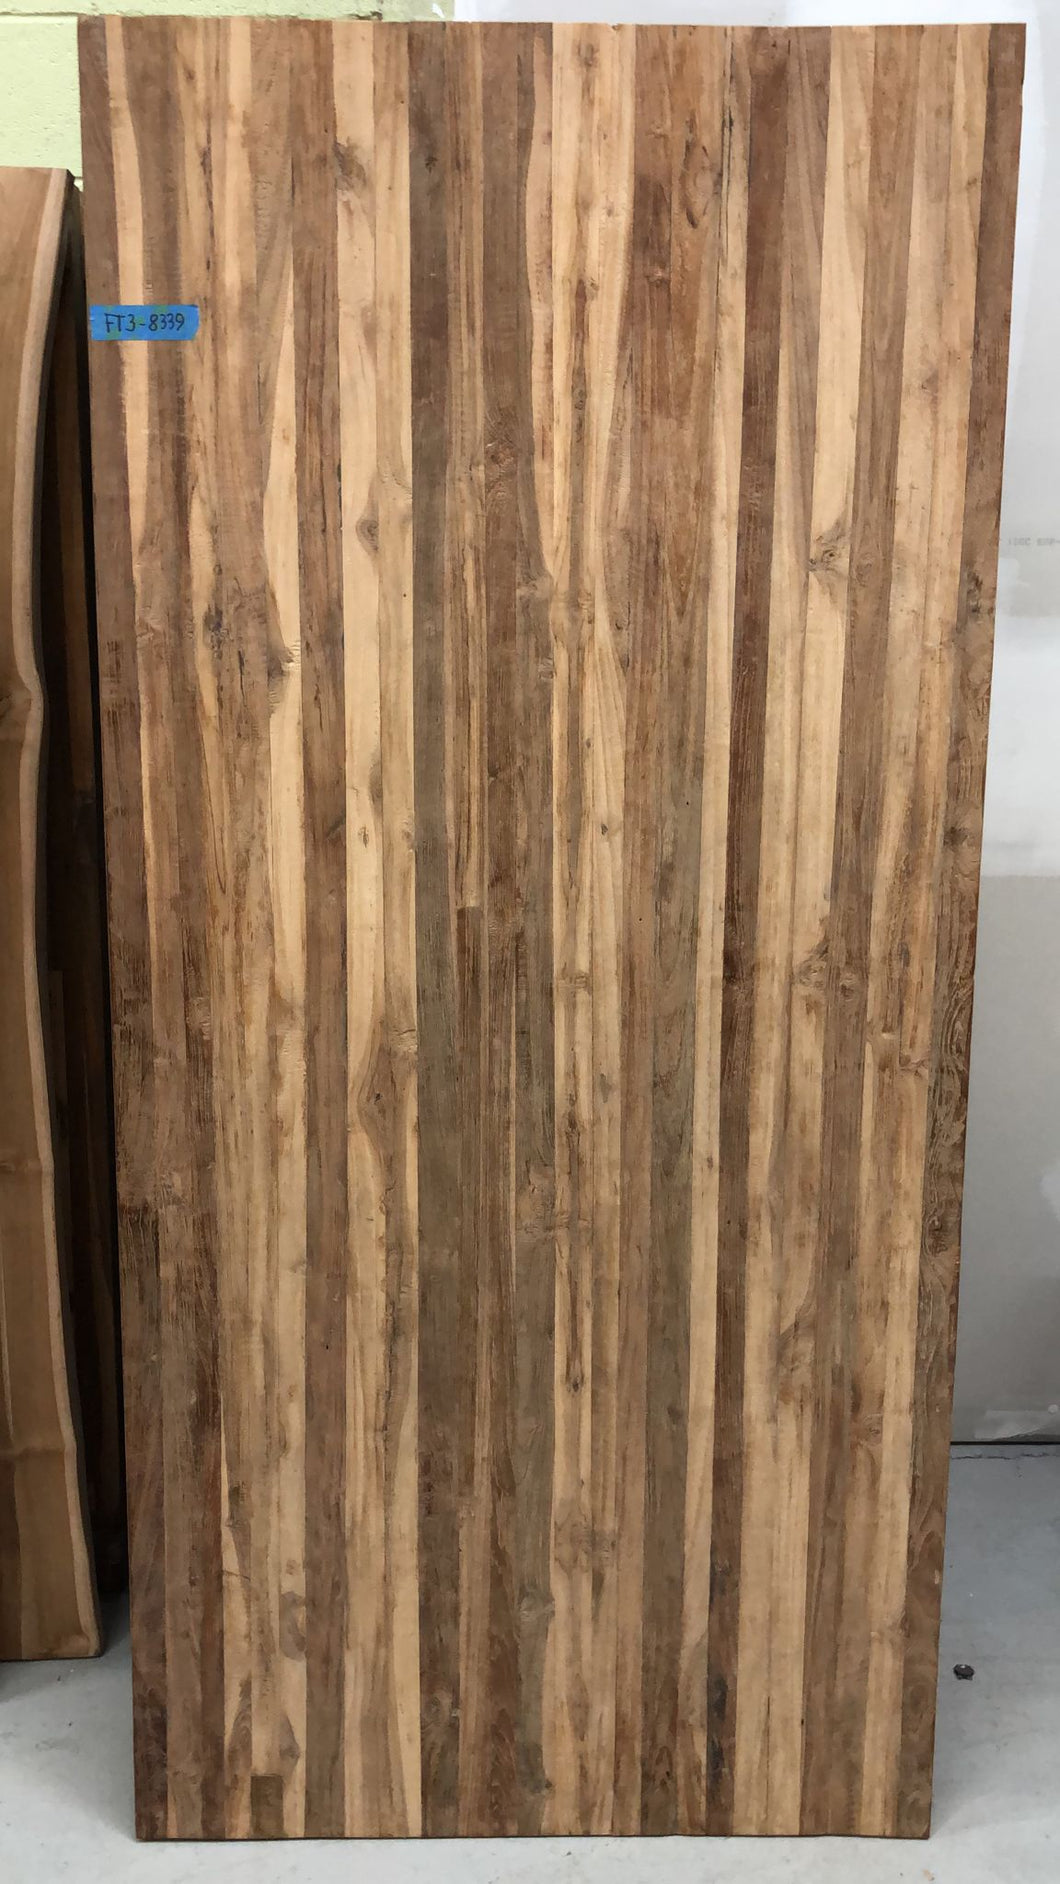 FT3-8339 Reclaimed teak wood dining table top